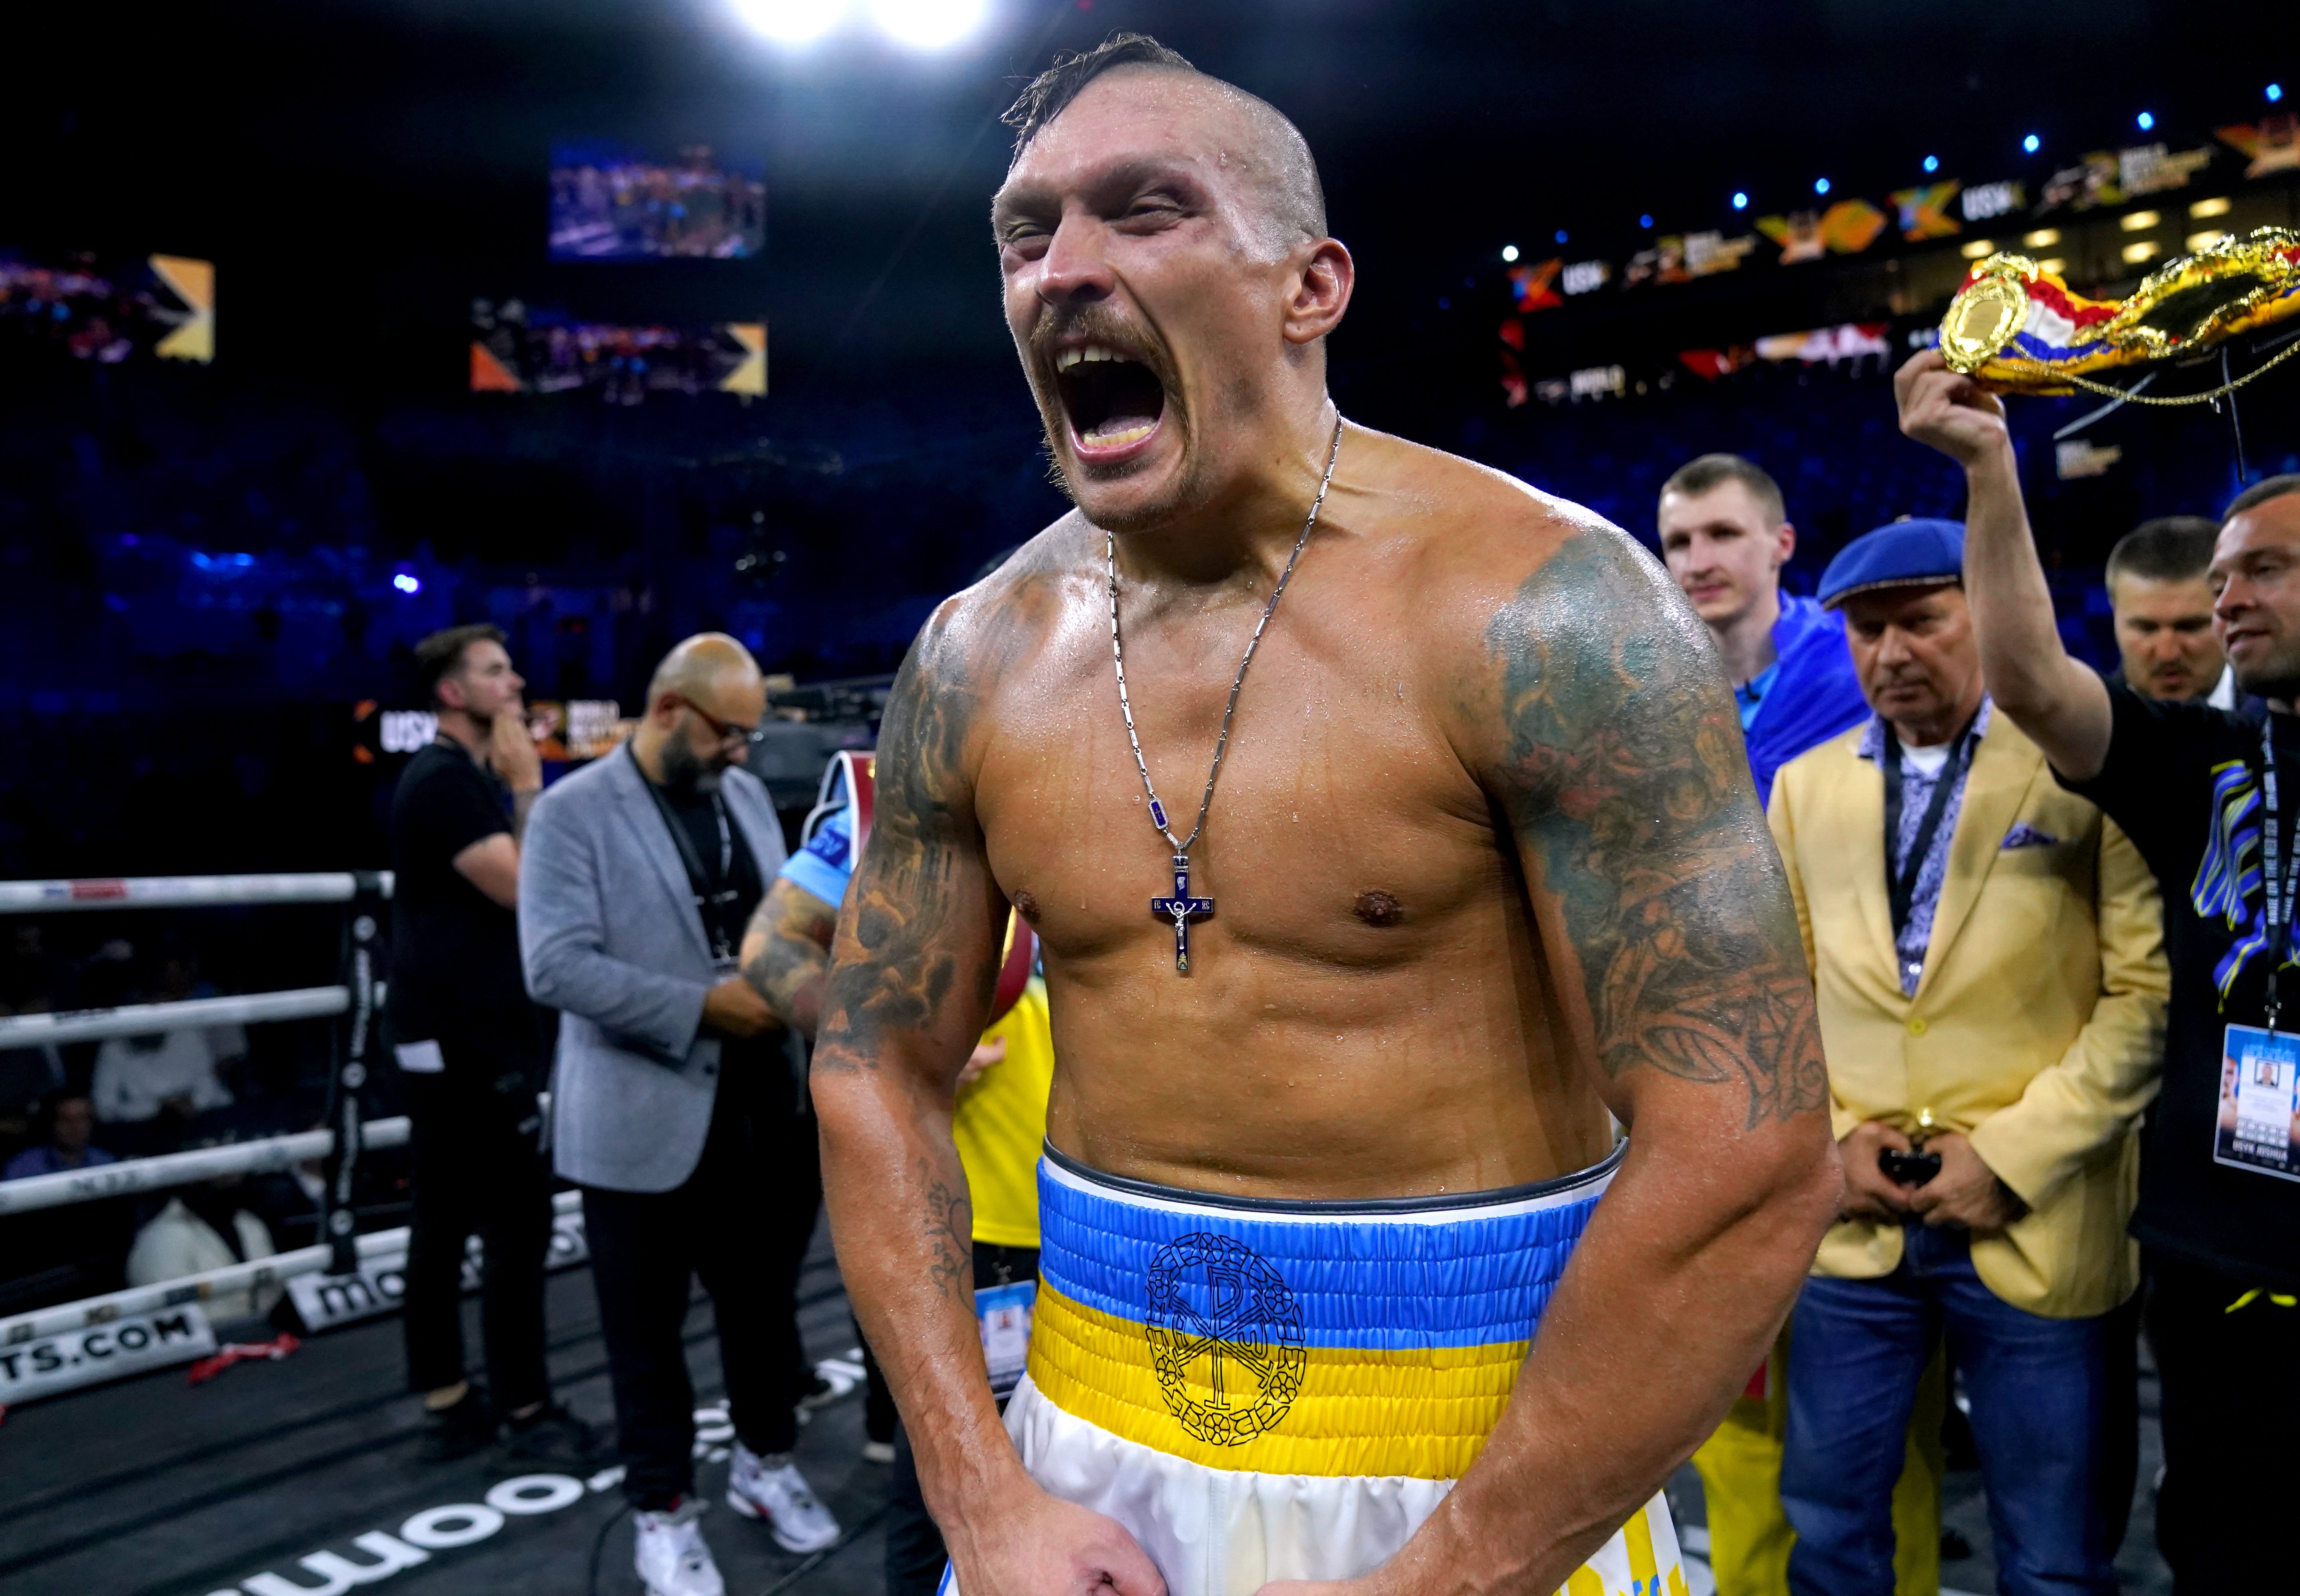 Oleksandr Usyks Filip Hrgovic fight wont influence Tyson Fury bout, promoter insists The Independent